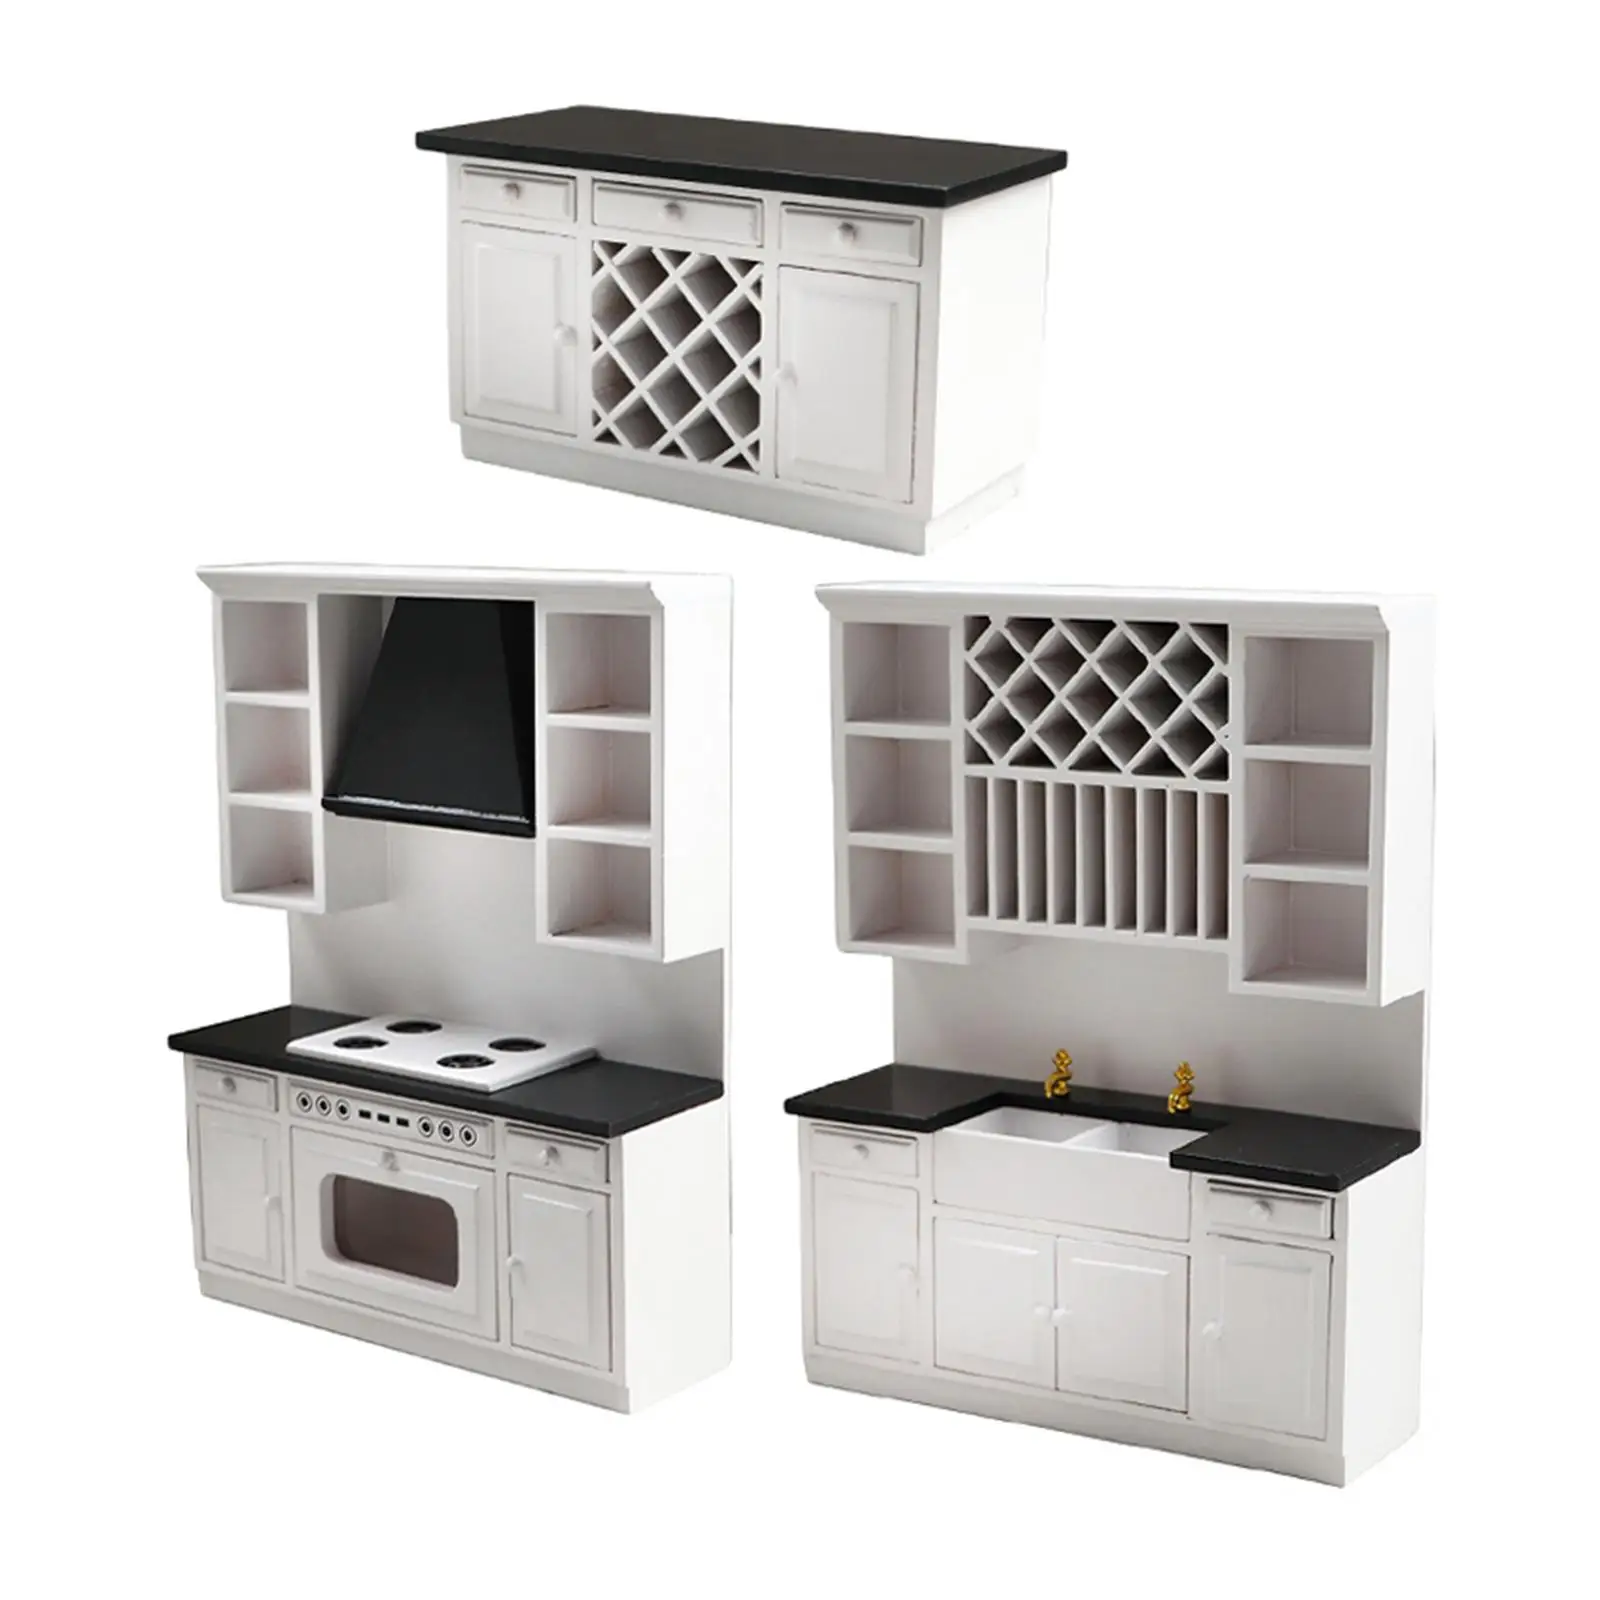 Dollhouse Kitchen Cabinet Dining Room Furniture Set Doll House DIY Decor Mini Bar Counter Furniture